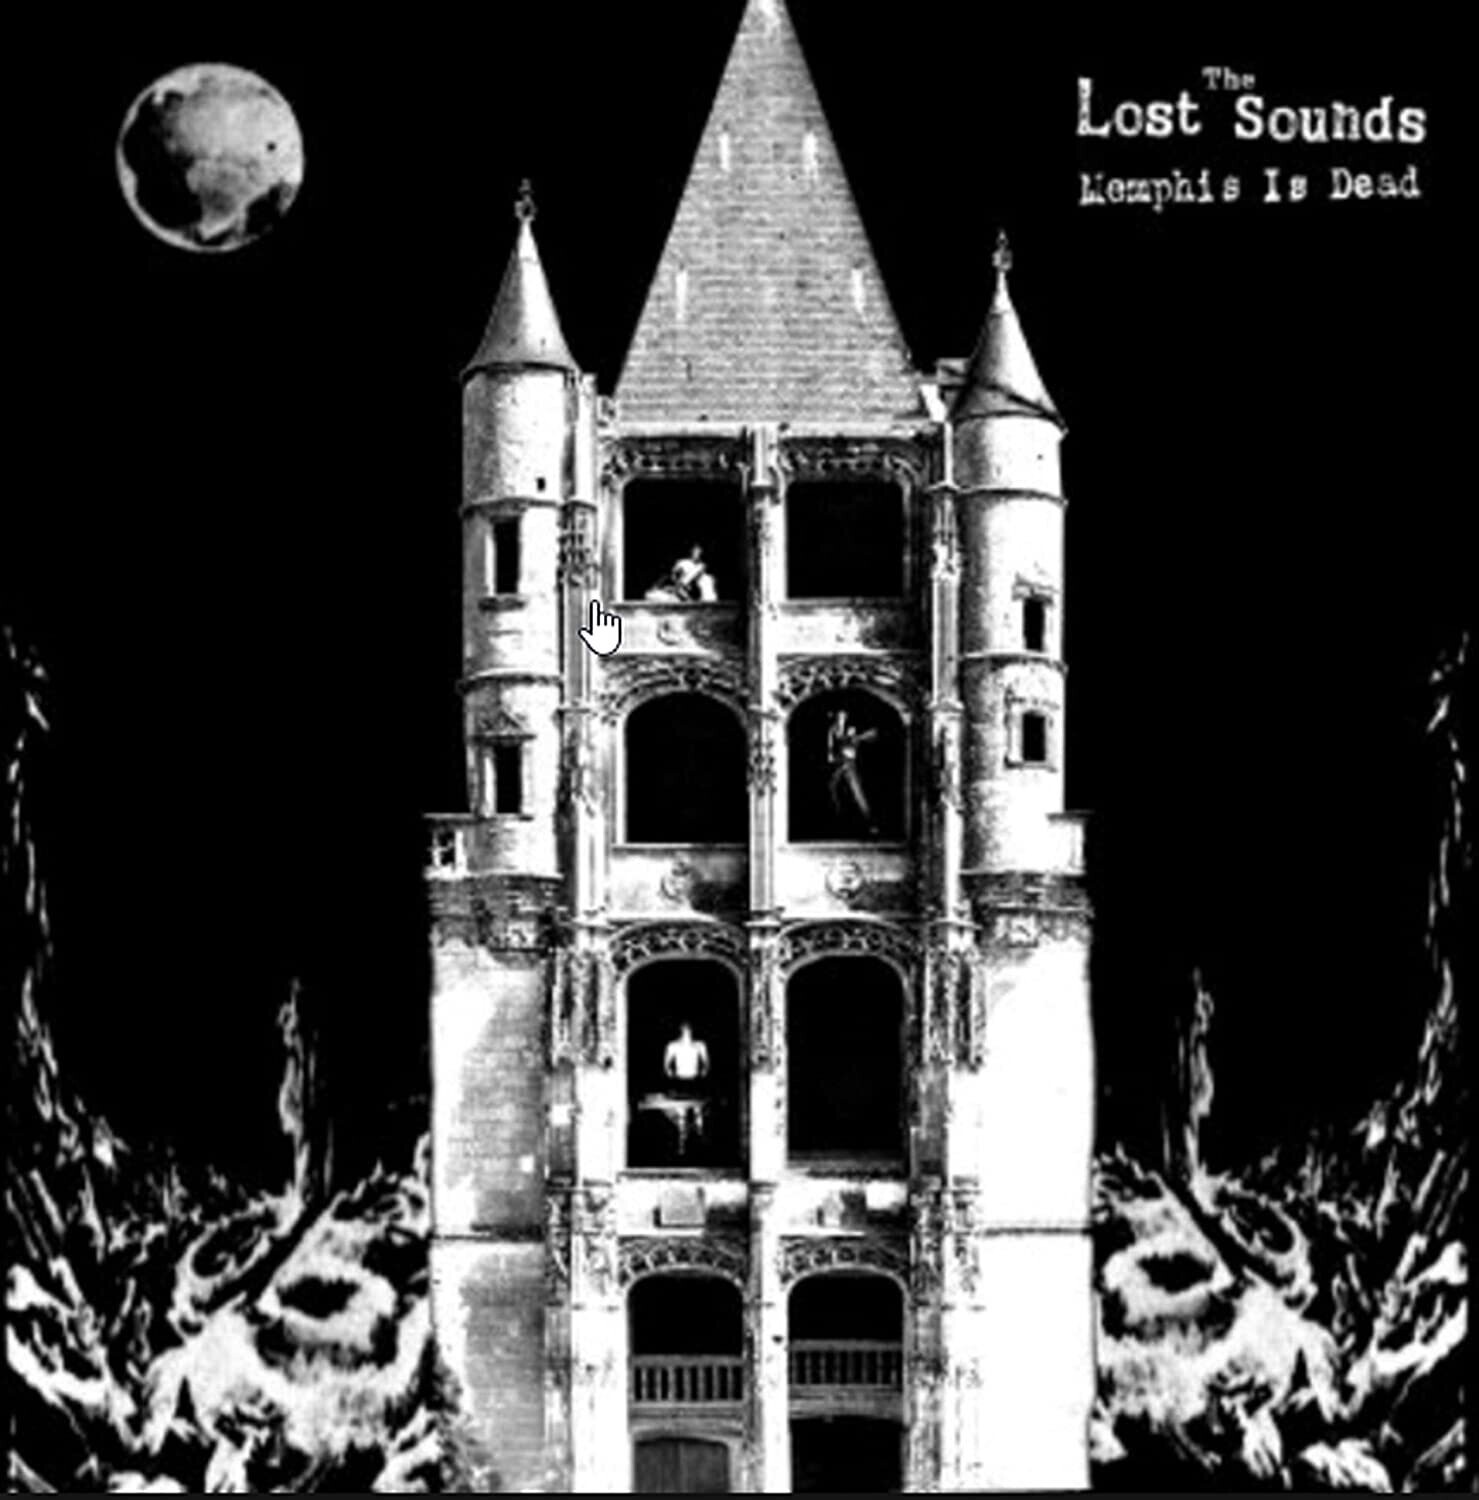 Lost Sounds, The "Memphis Is Dead"